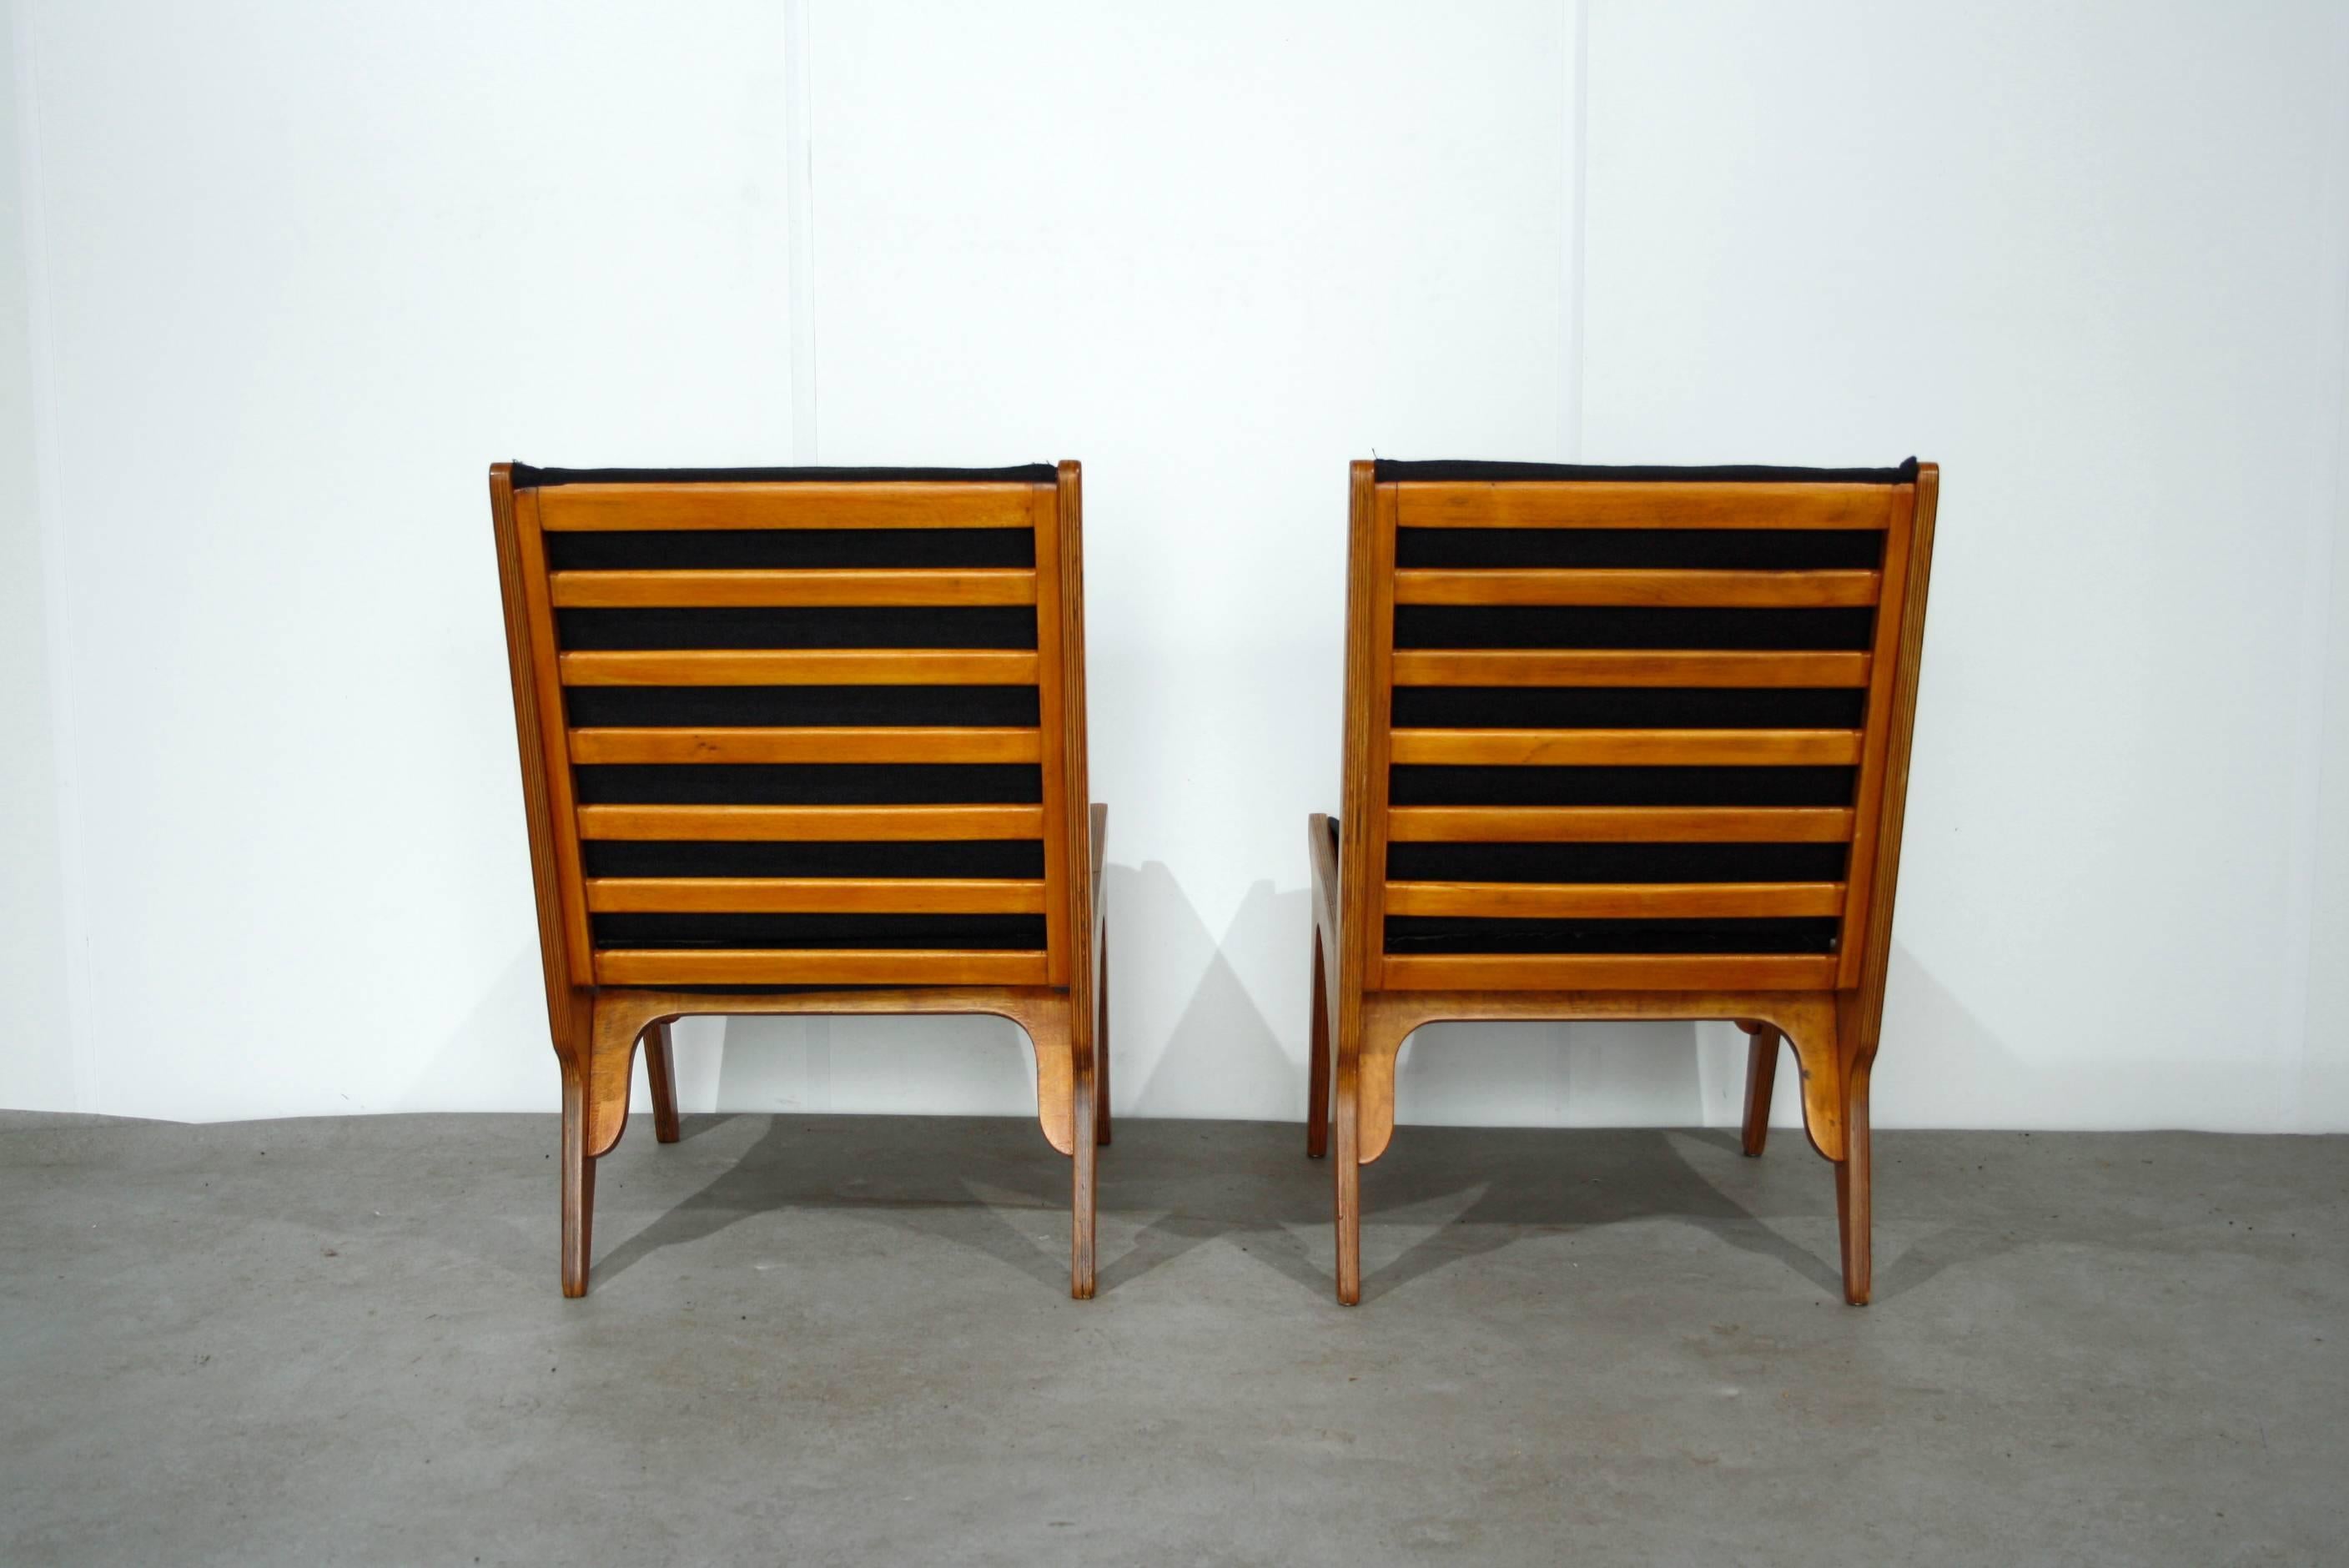 20th Century Pair of “Dordrecht” Lounge Chairs by W Van Gelderen for ’t Spectrum Dutch, 1951